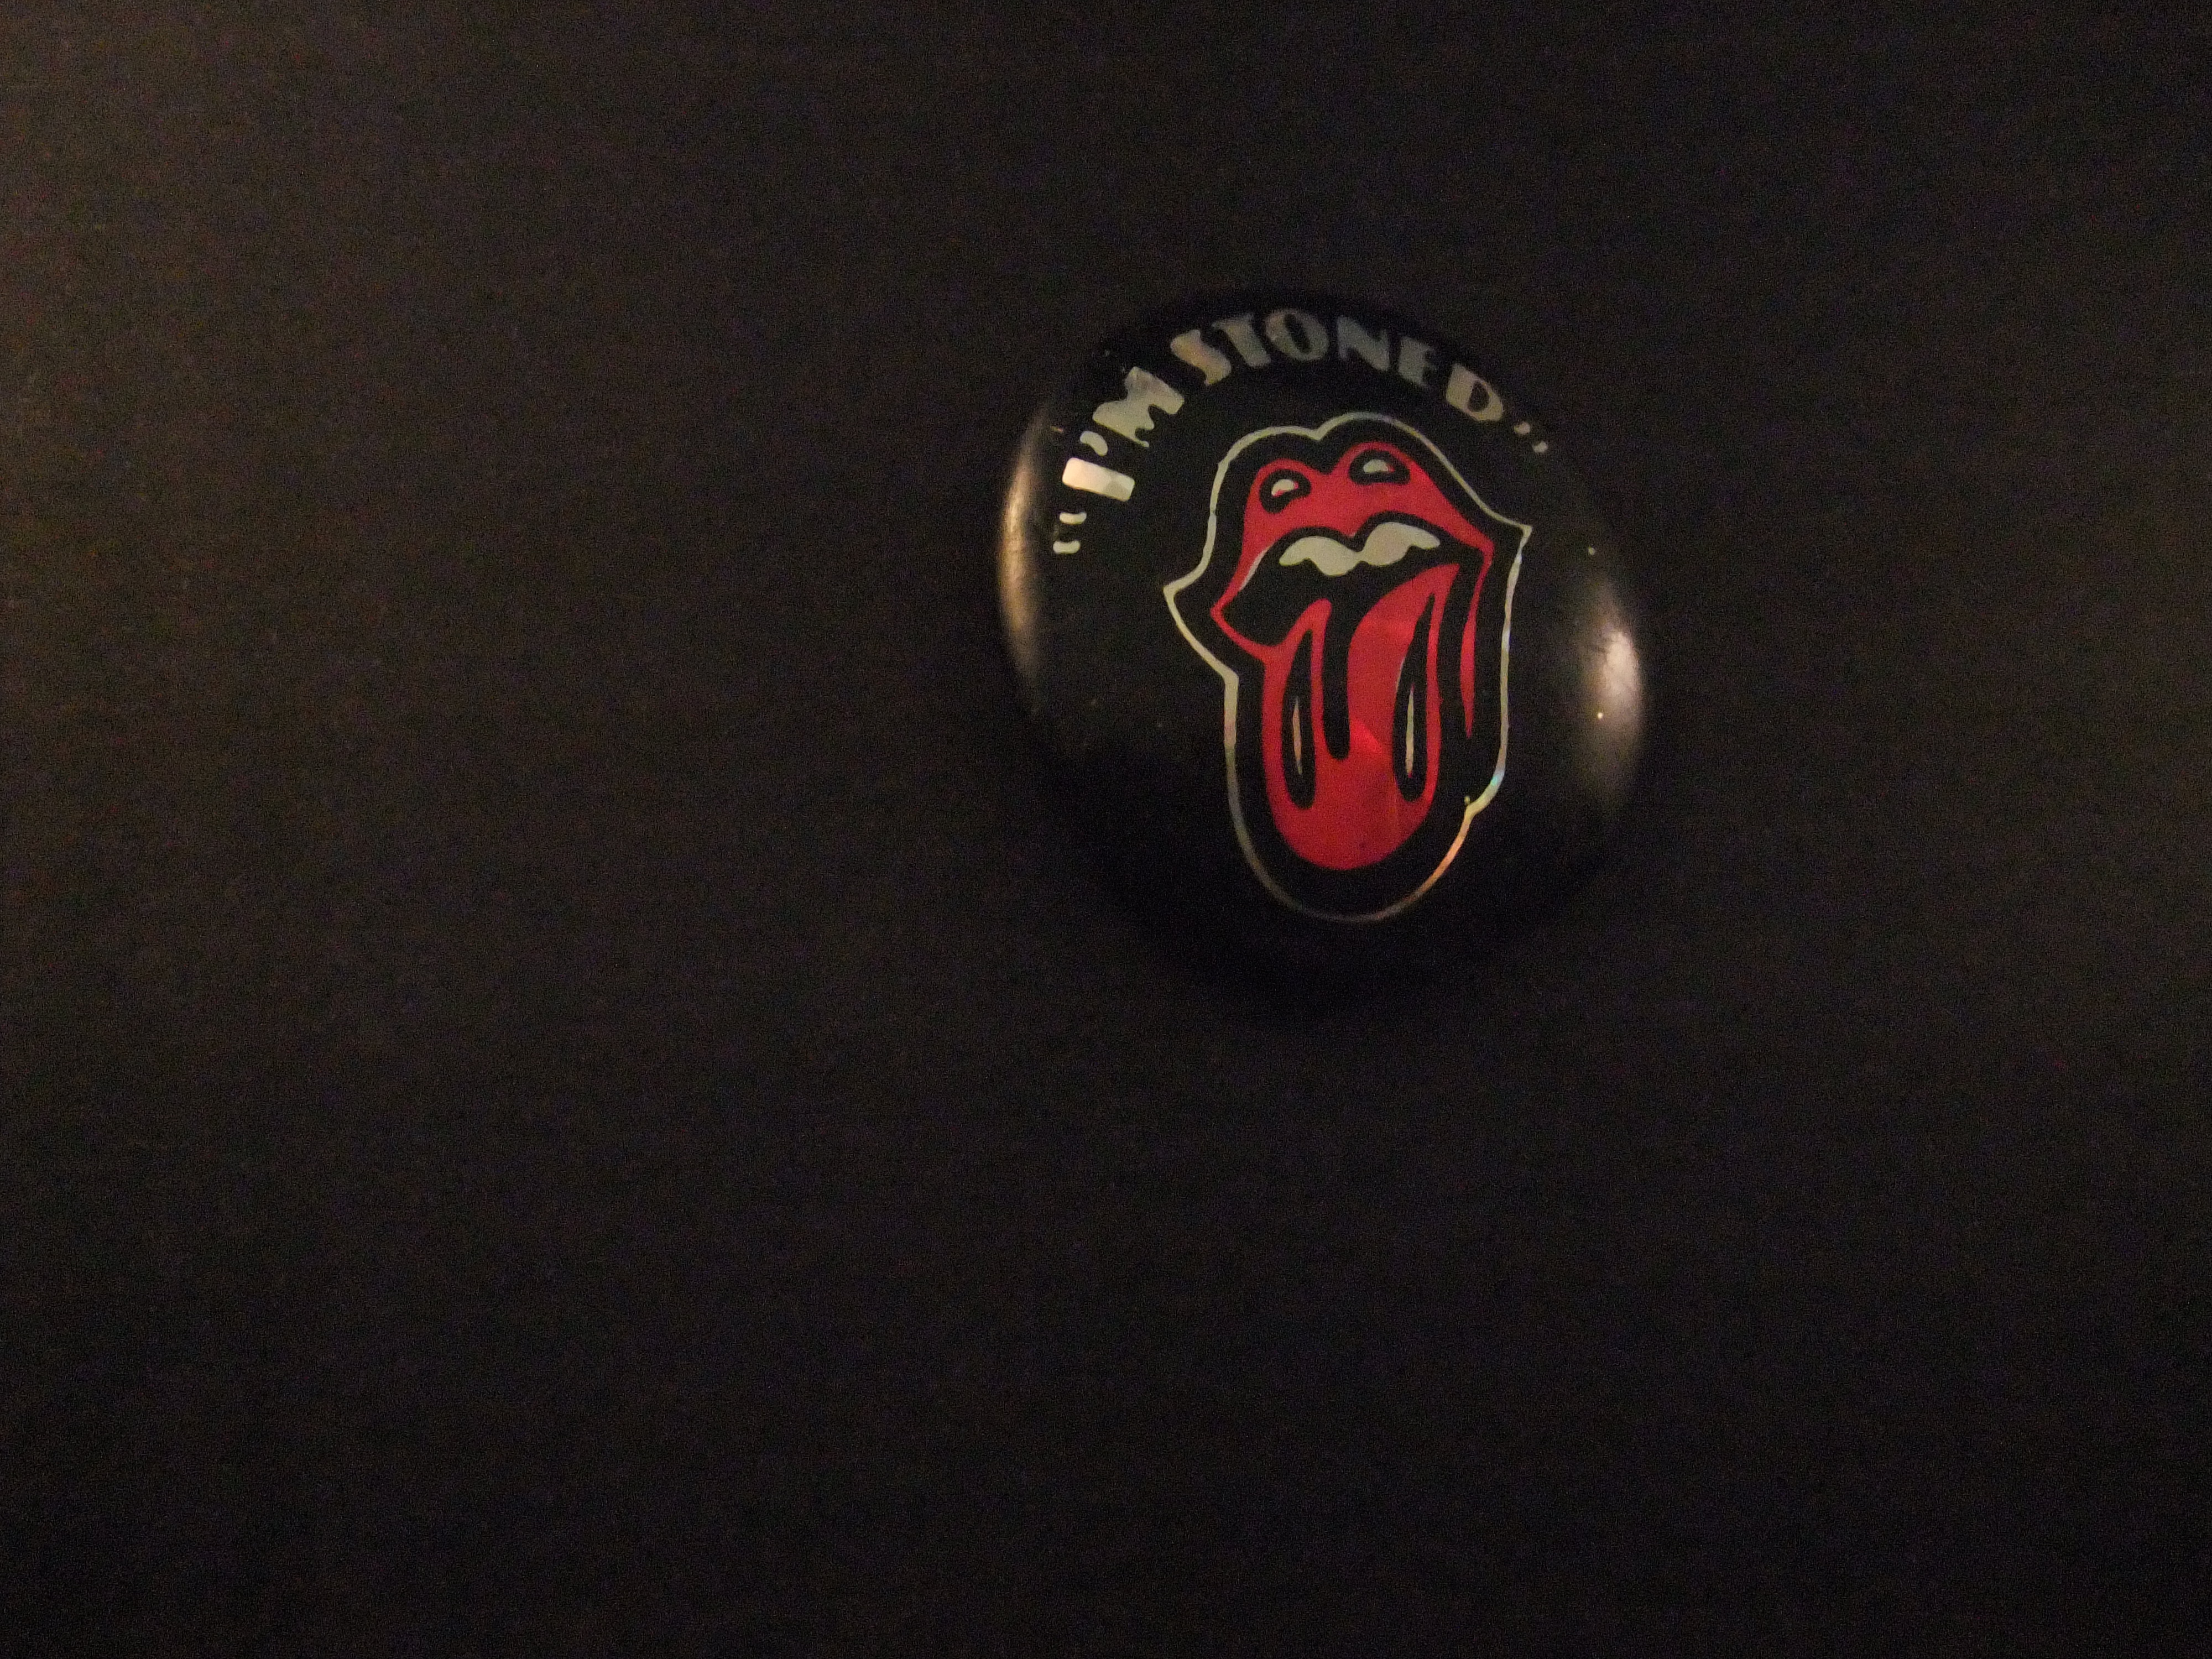 The Rolling Stones Engelse rockband, I am stoned, zilverkleurige letters